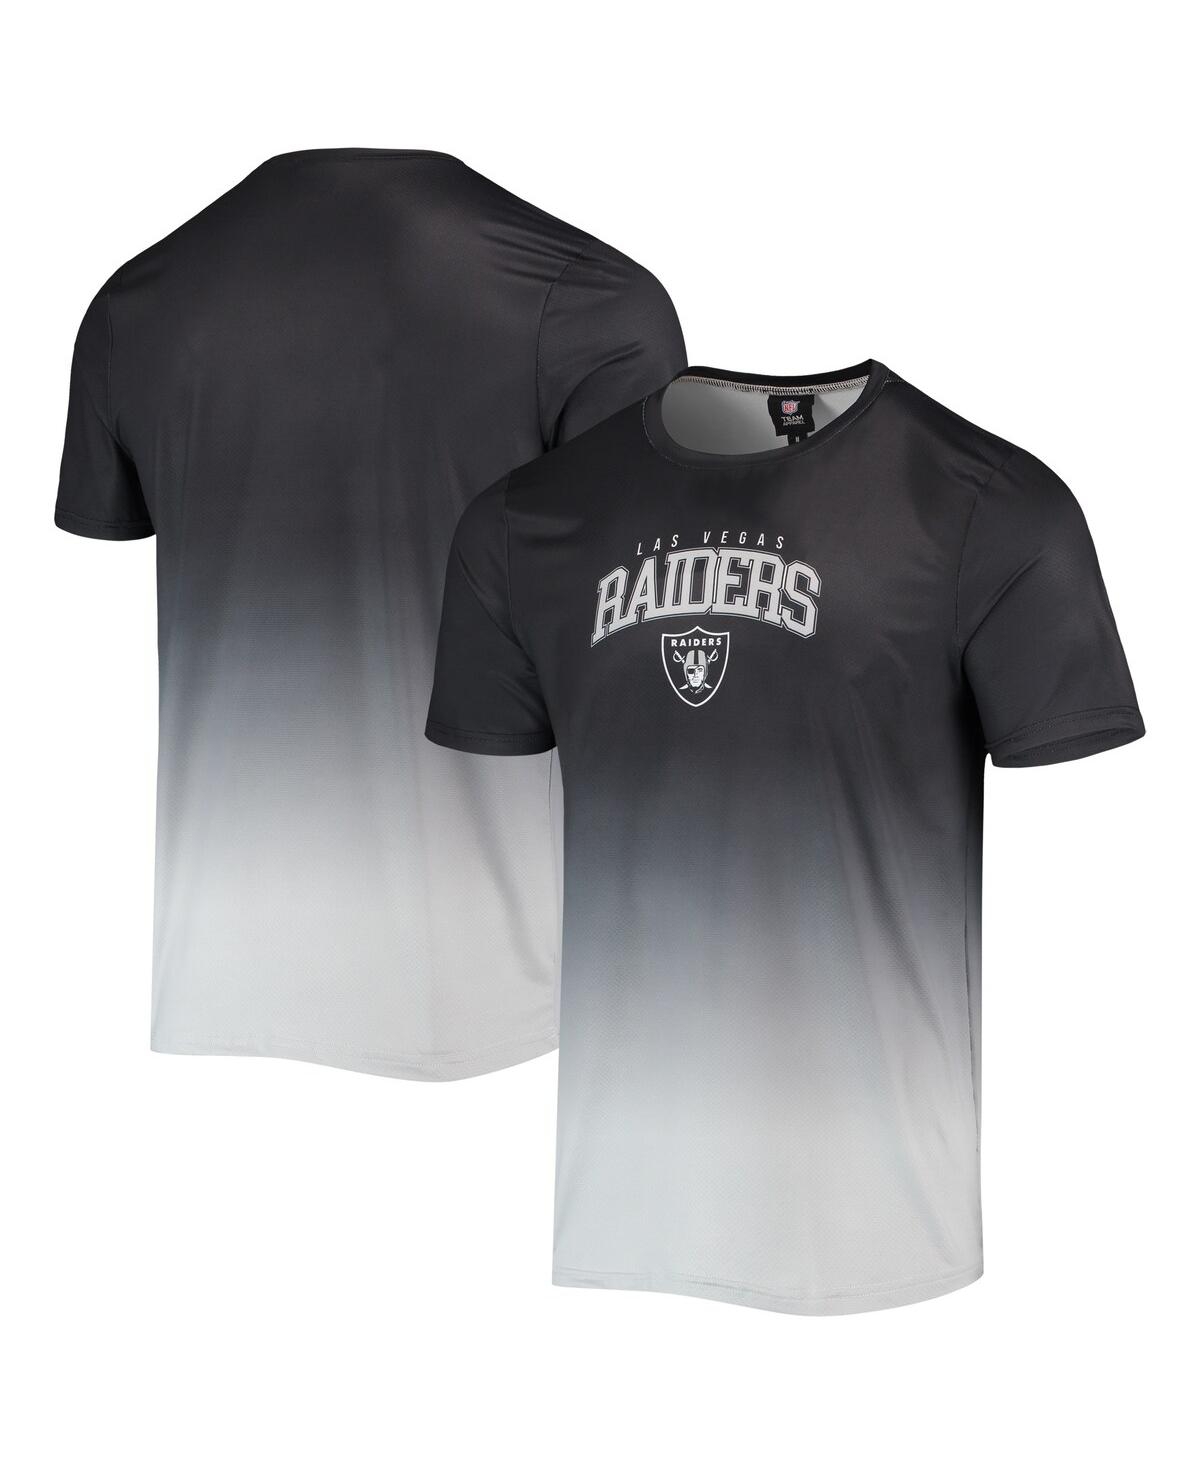 Men's Foco Black, Silver Las Vegas Raiders Gradient Rash Guard Swim Shirt - Black, Silver